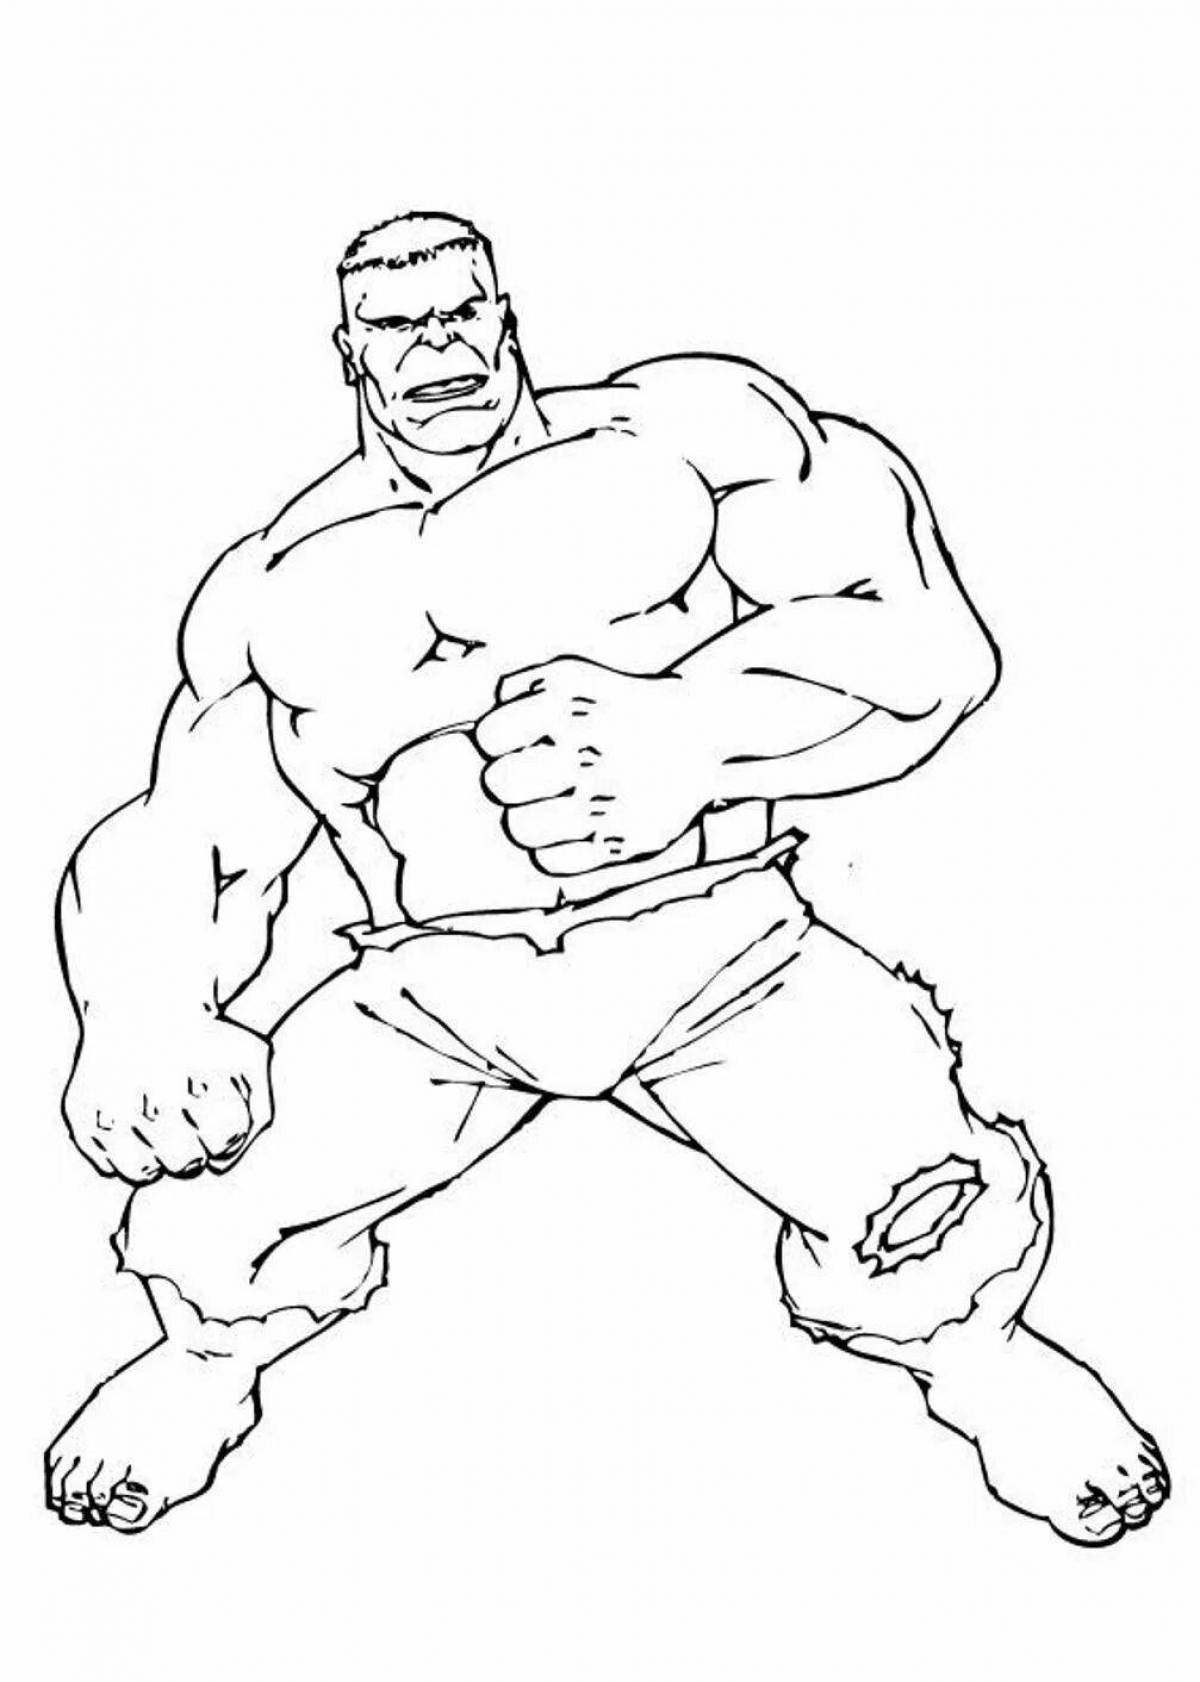 Gorgeous Hulk coloring page